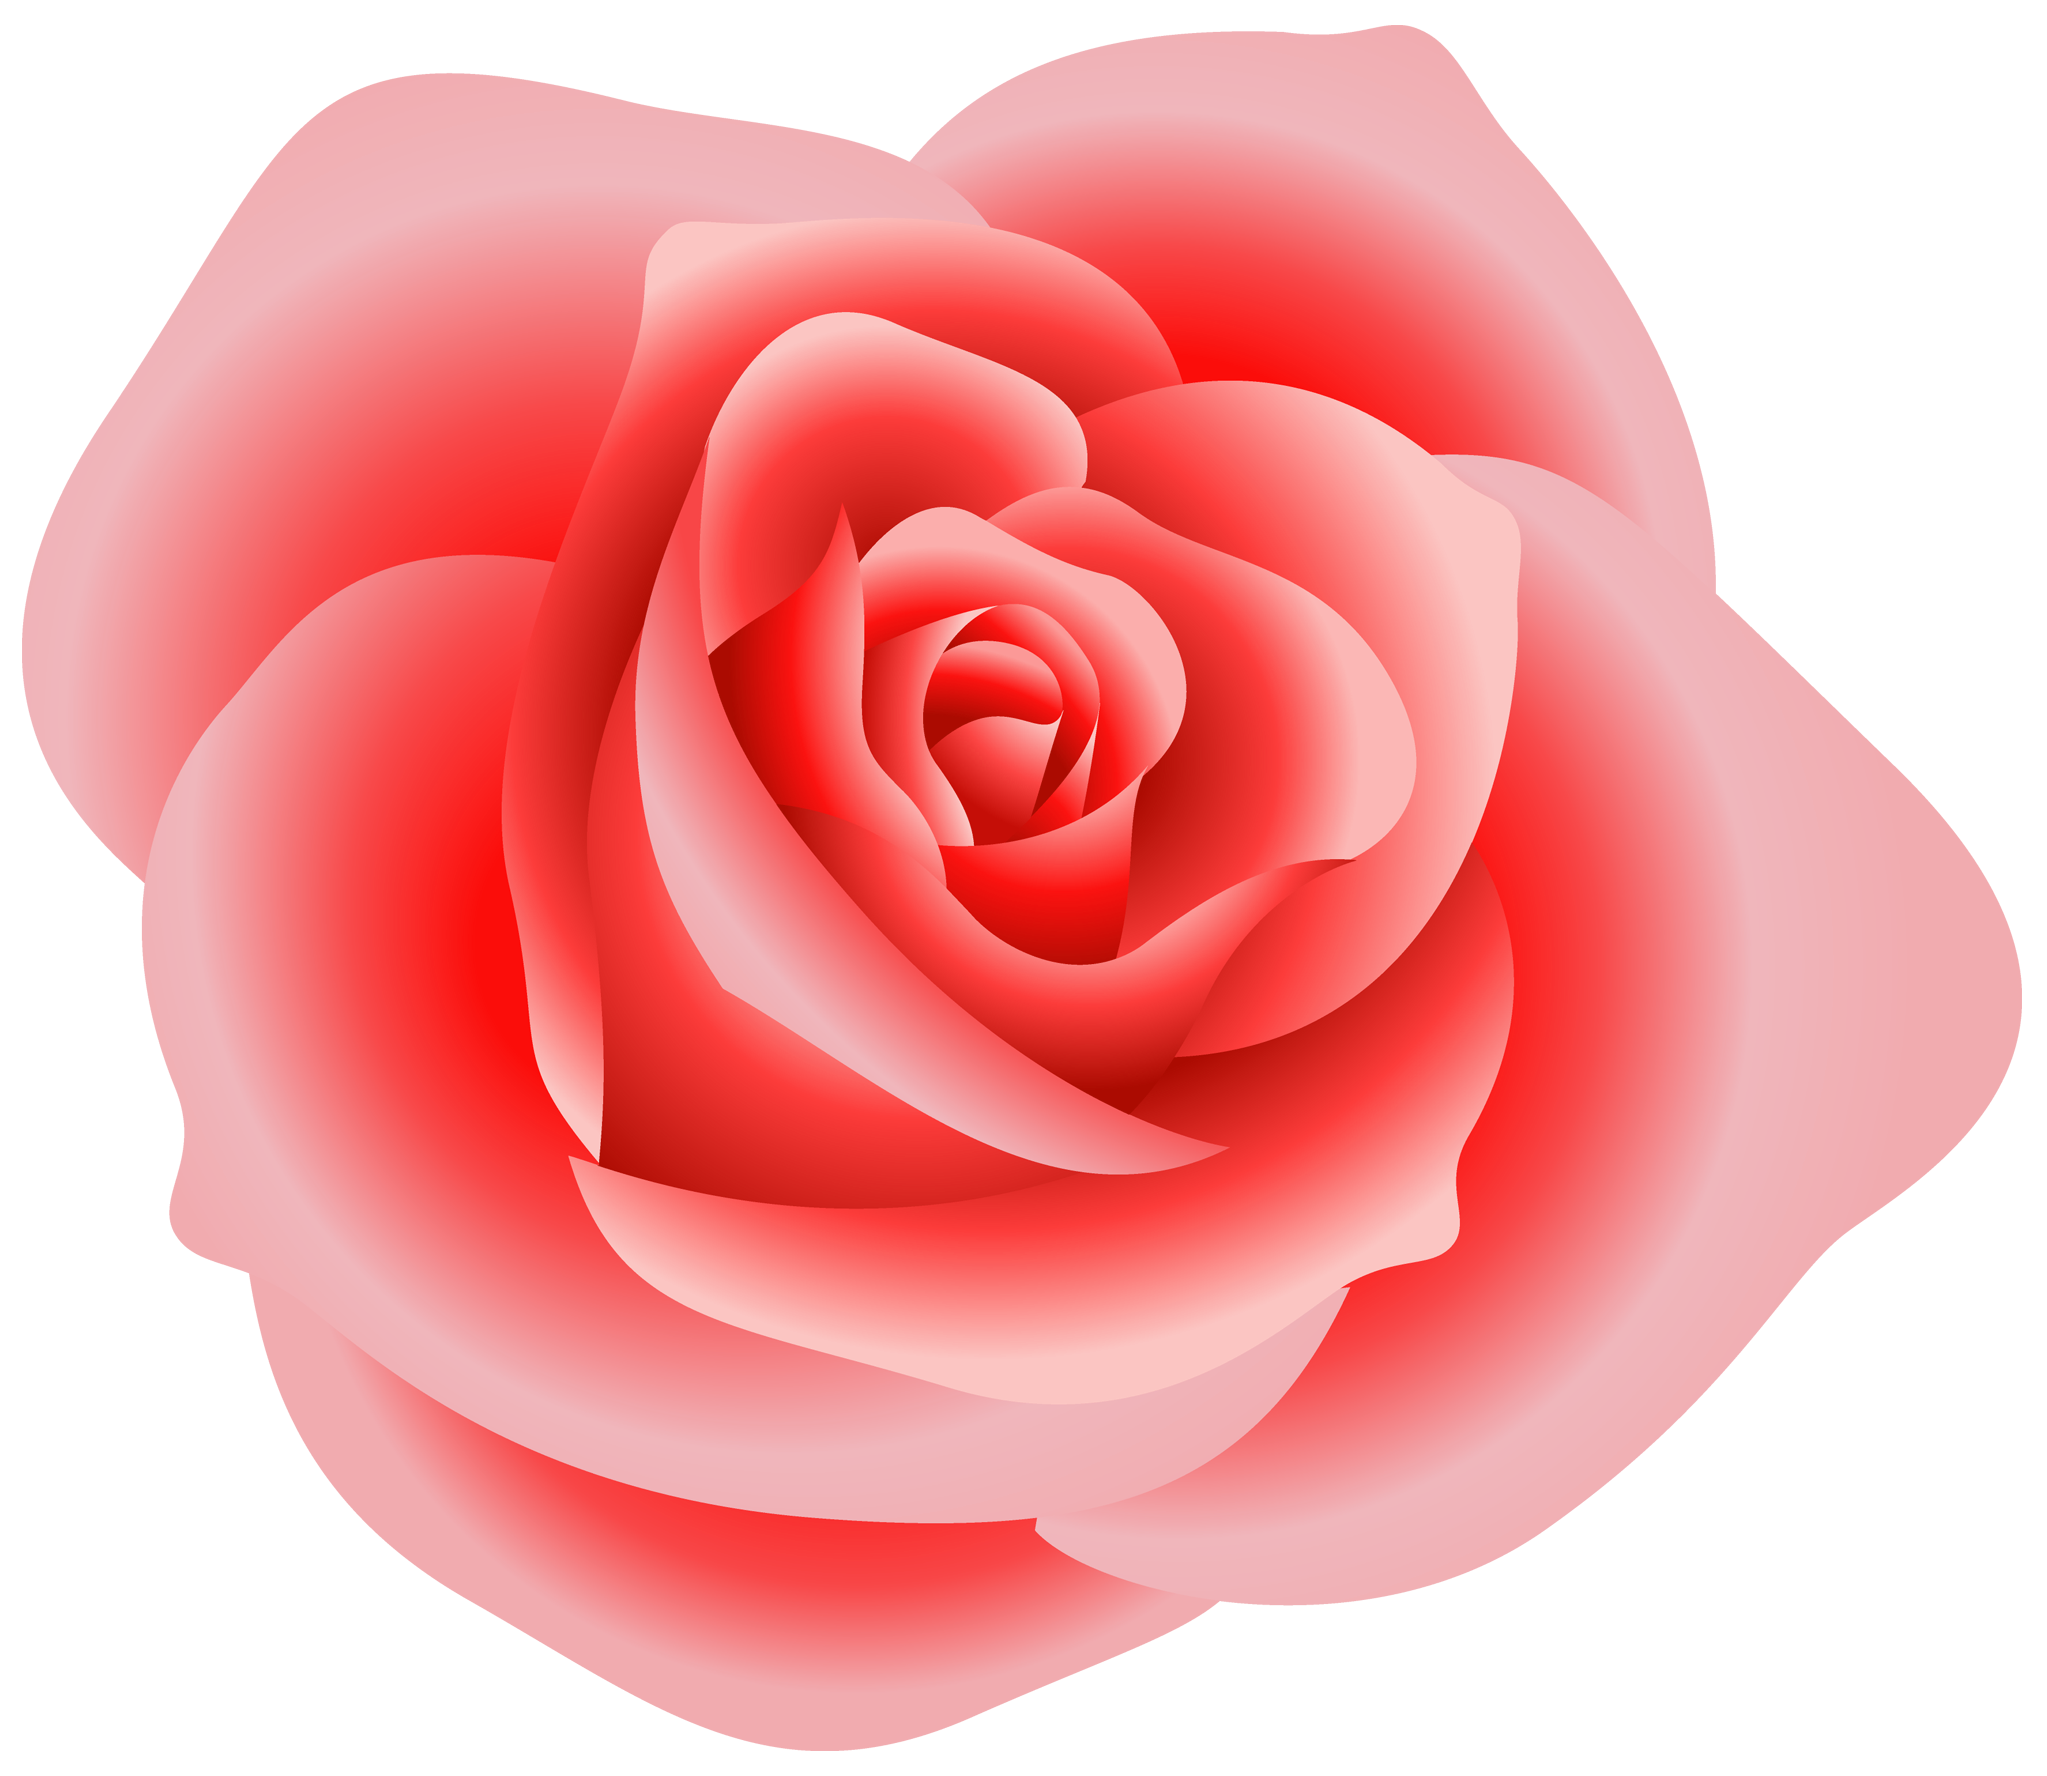 Roses rose clip art vector im - Rose Clip Art Images